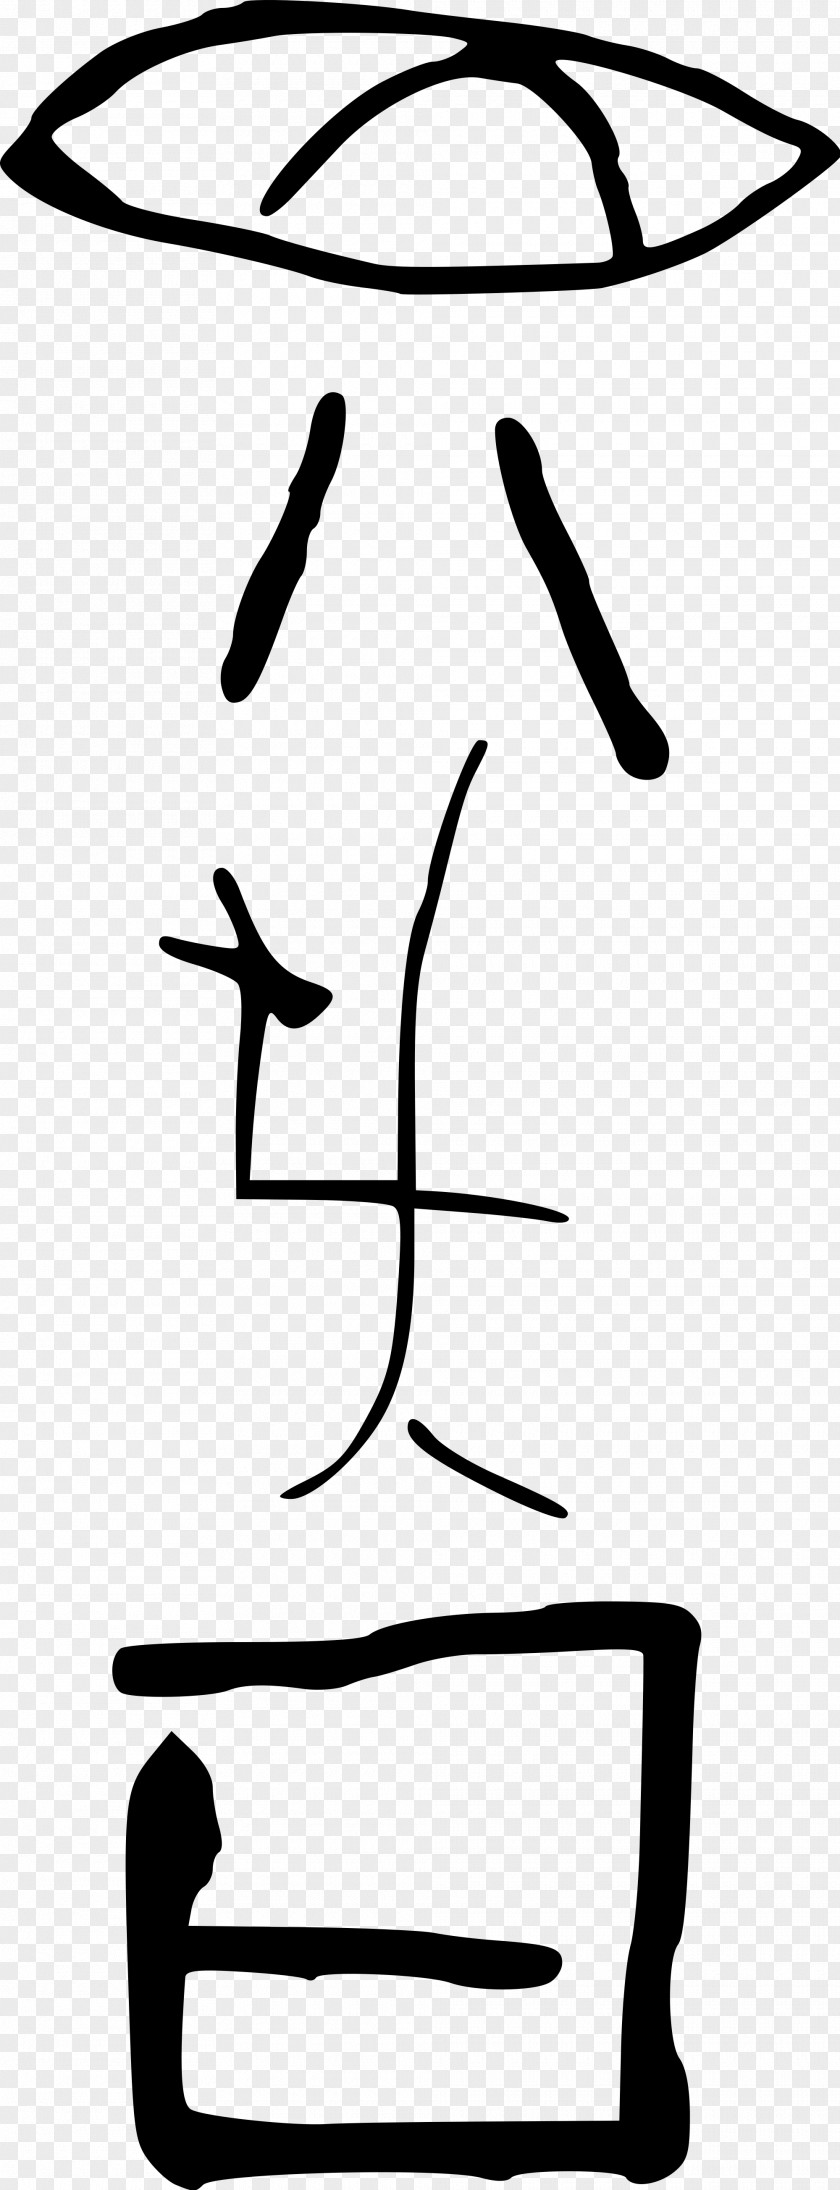 Henan Jiahu Symbols 7th Millennium BC Neolithic Proto-writing PNG